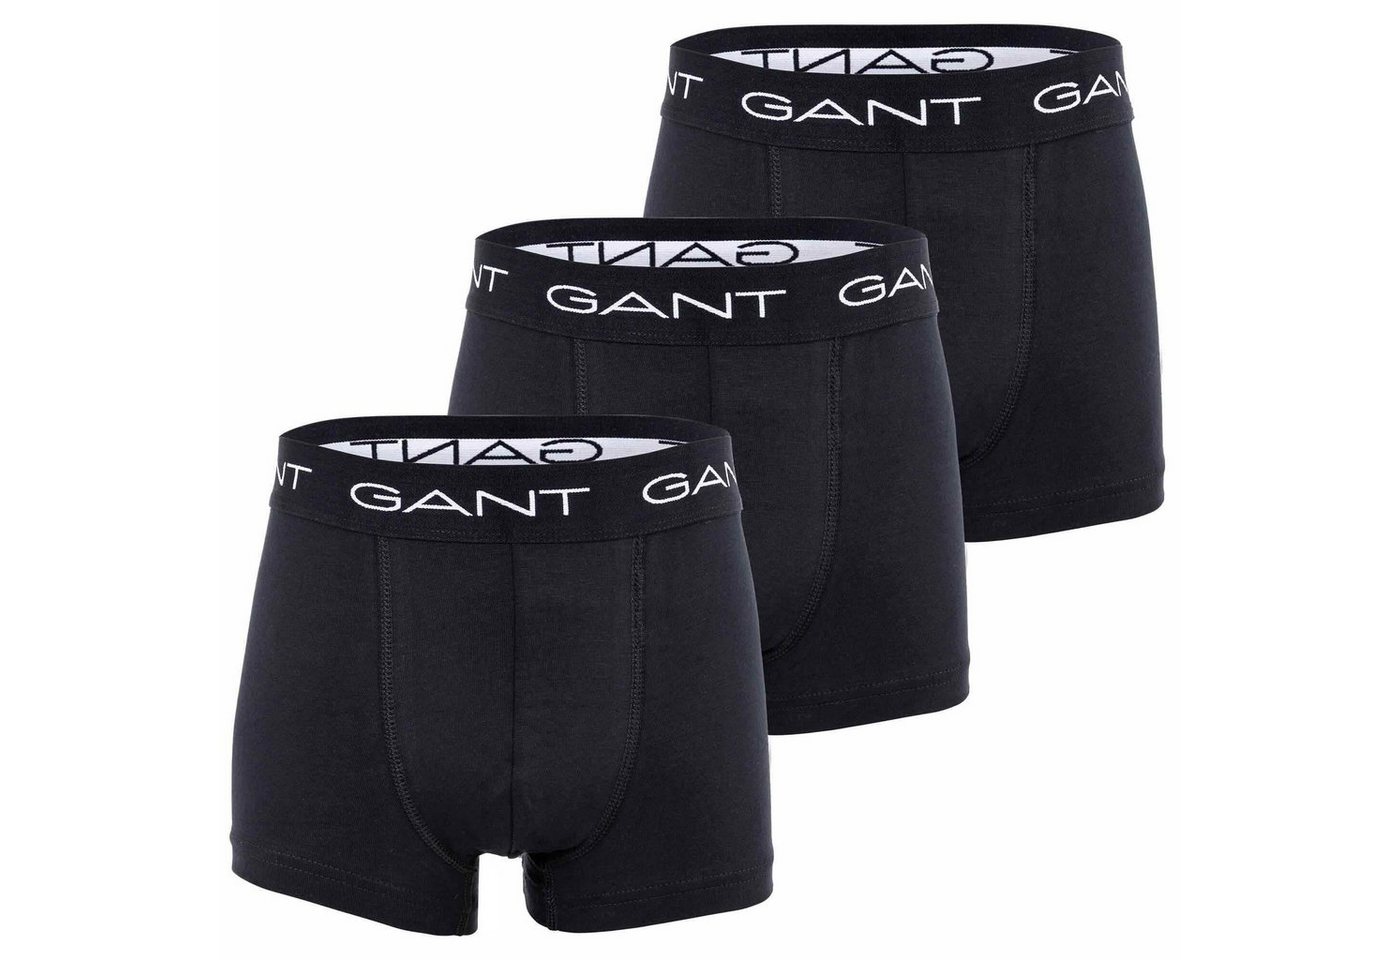 Gant Boxer Jungen Boxershorts, 3er Pack - Trunks, Cotton von Gant